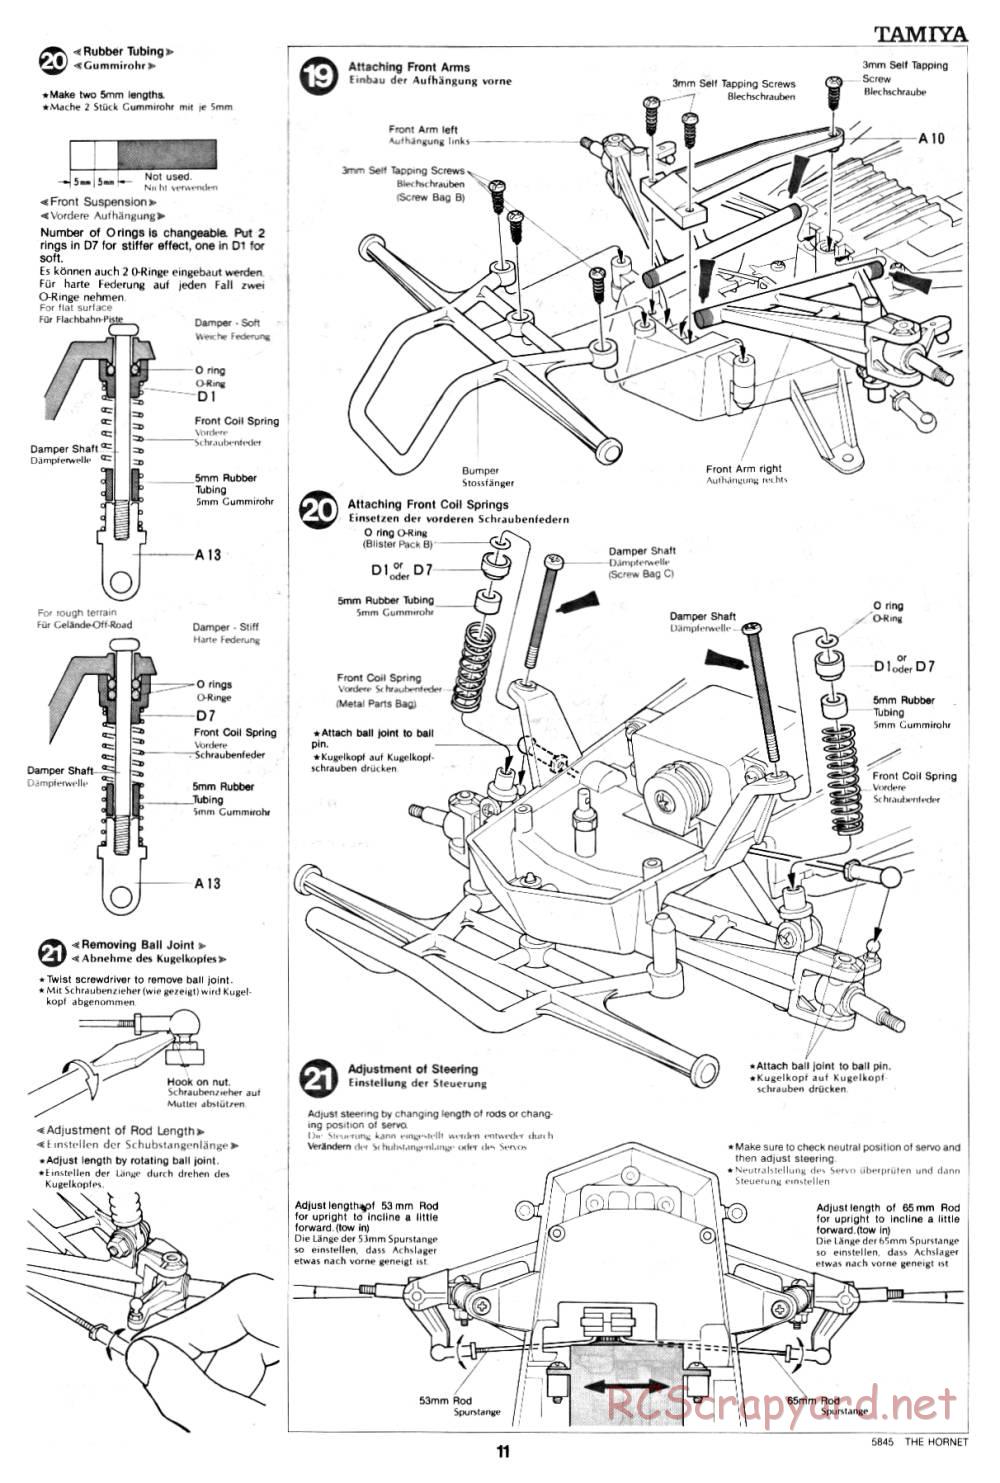 Tamiya - The Hornet - 58045 - Manual - Page 11